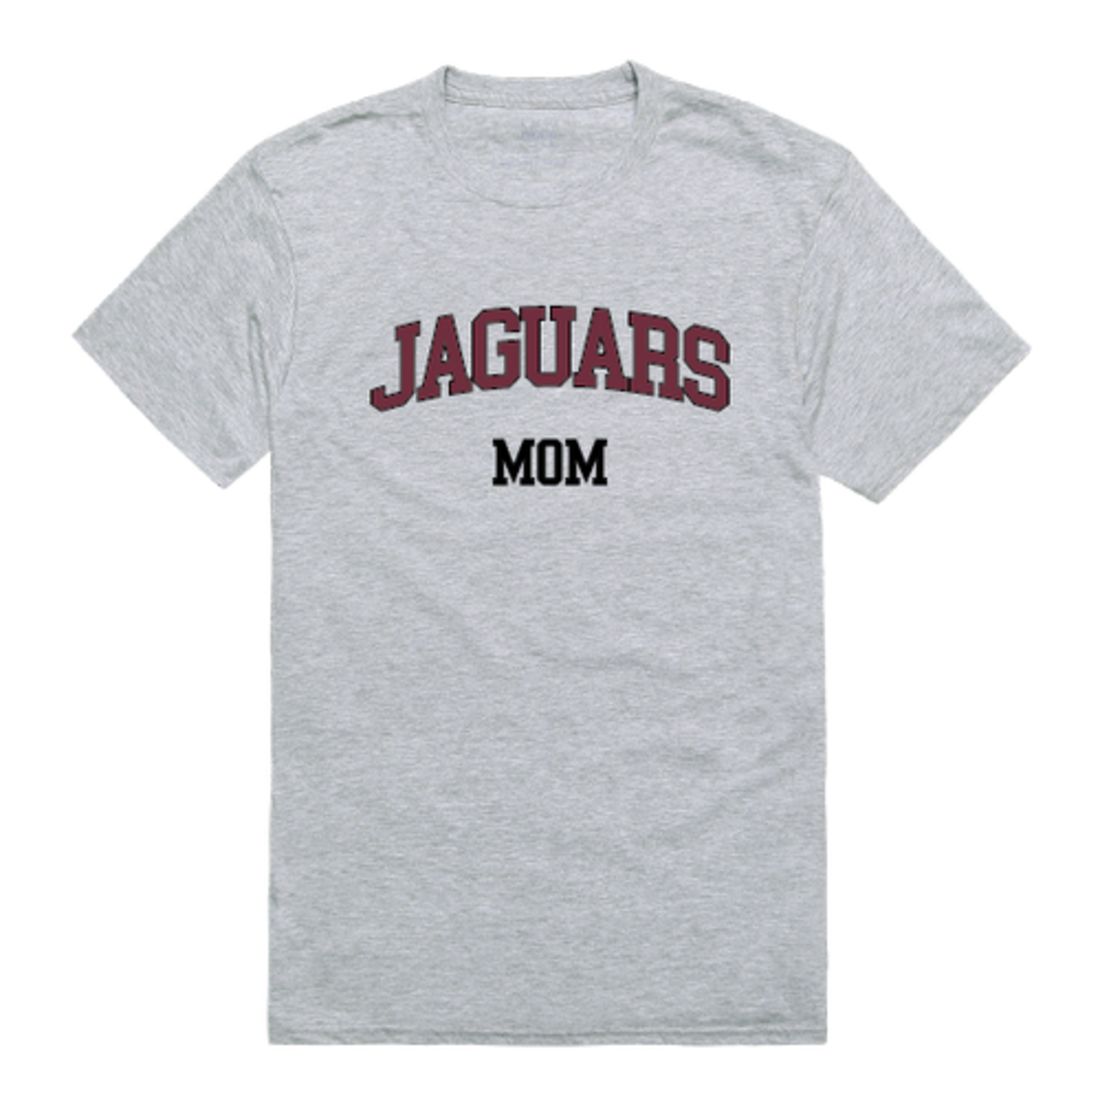 Texas A&M University-San Antonio Jaguars Mom T-Shirt